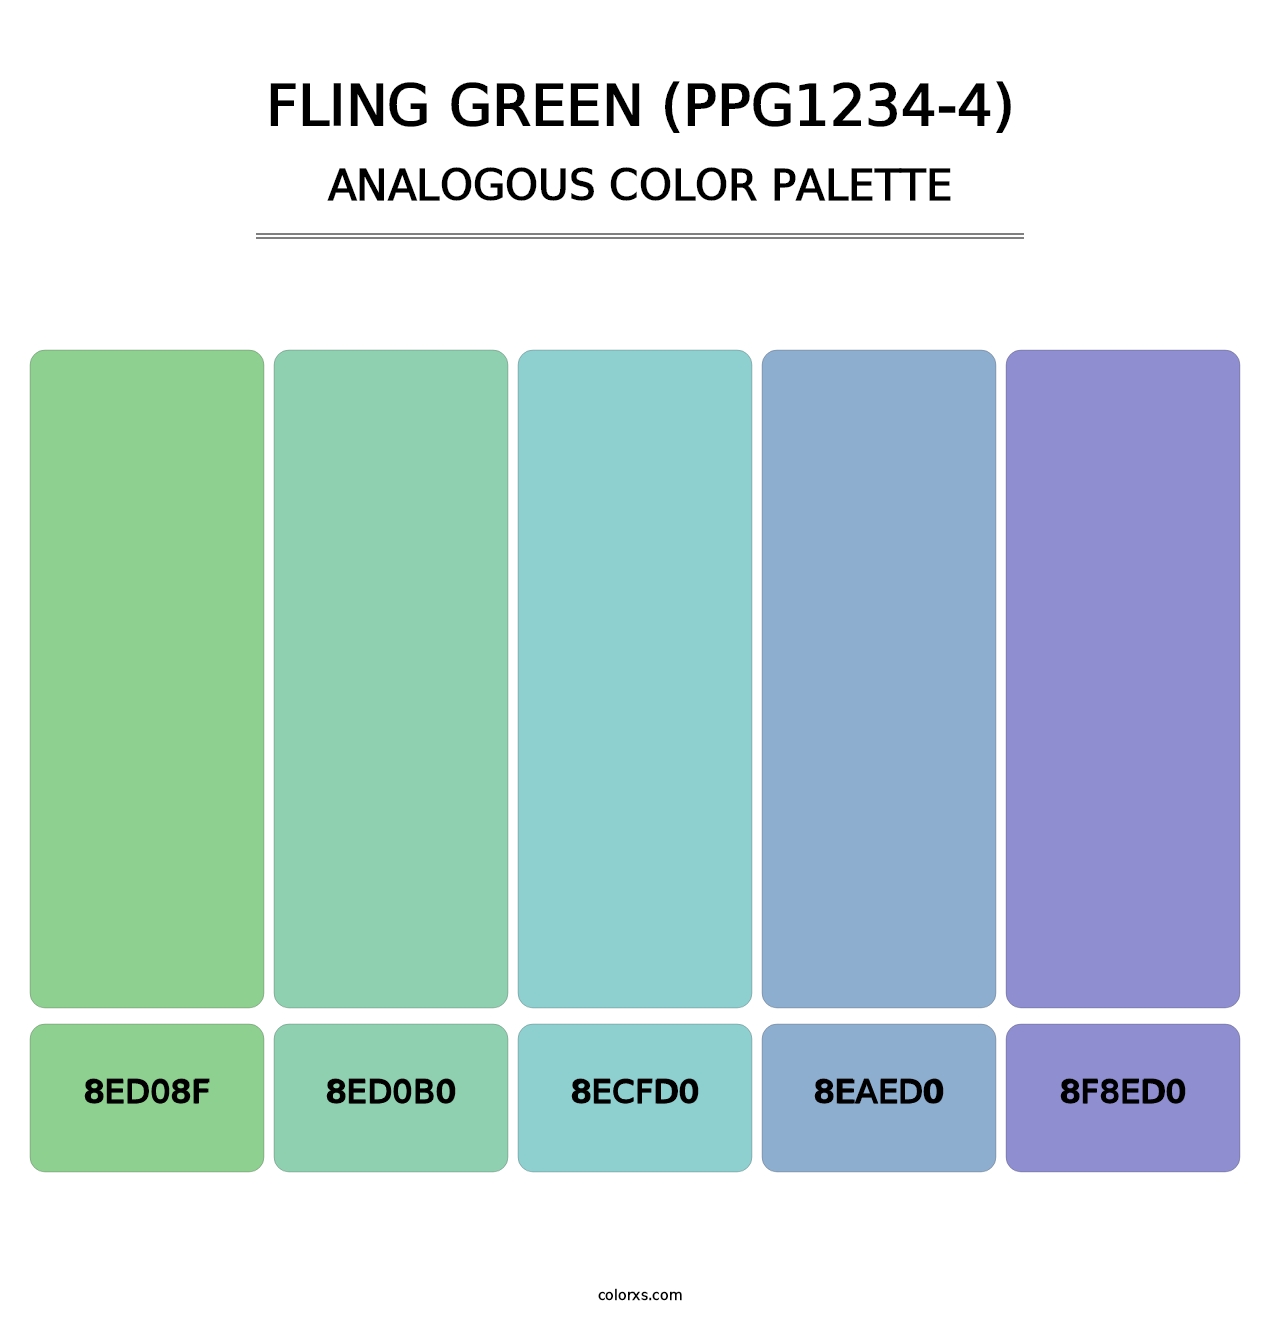 Fling Green (PPG1234-4) - Analogous Color Palette